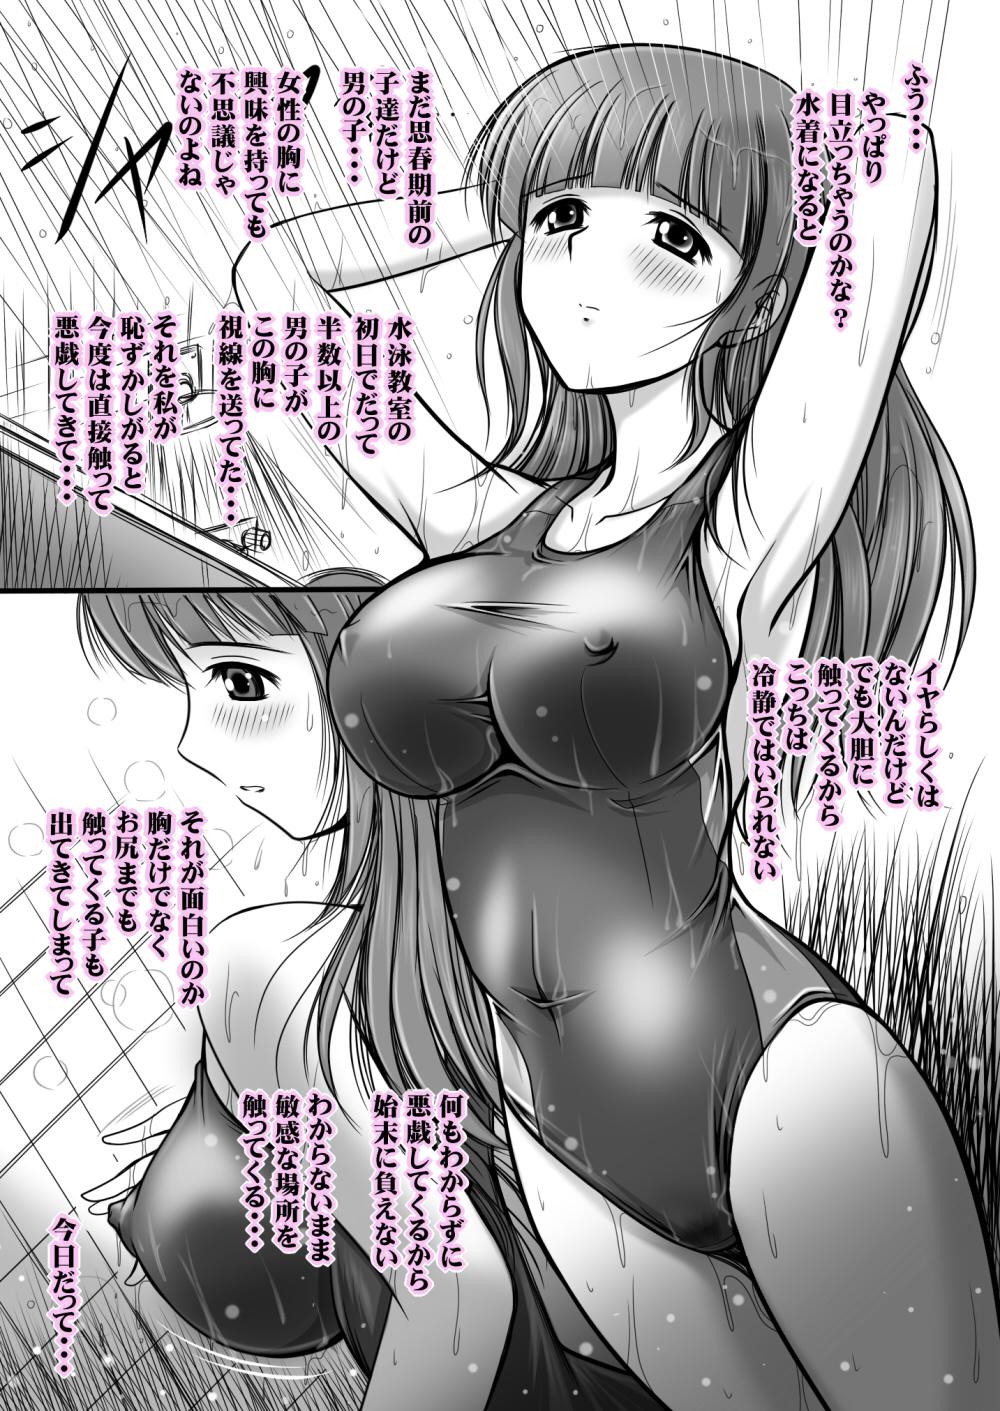 Licking Poolside no Mermaid - Hanasaku iroha Tranny Sex - Page 4